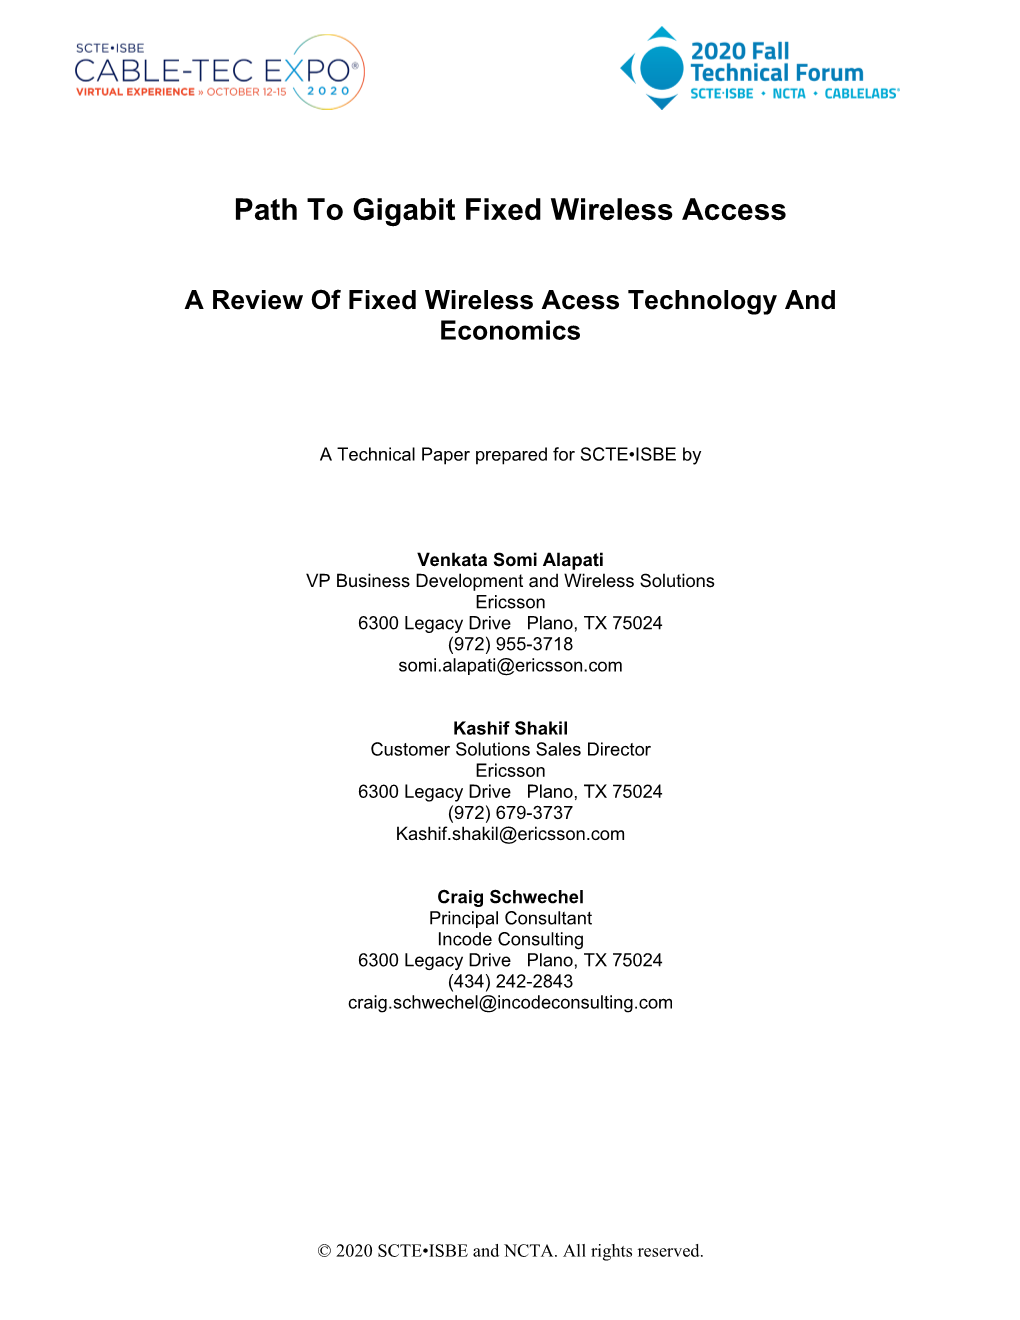 Path to Gigabit Fixed Wireless Access